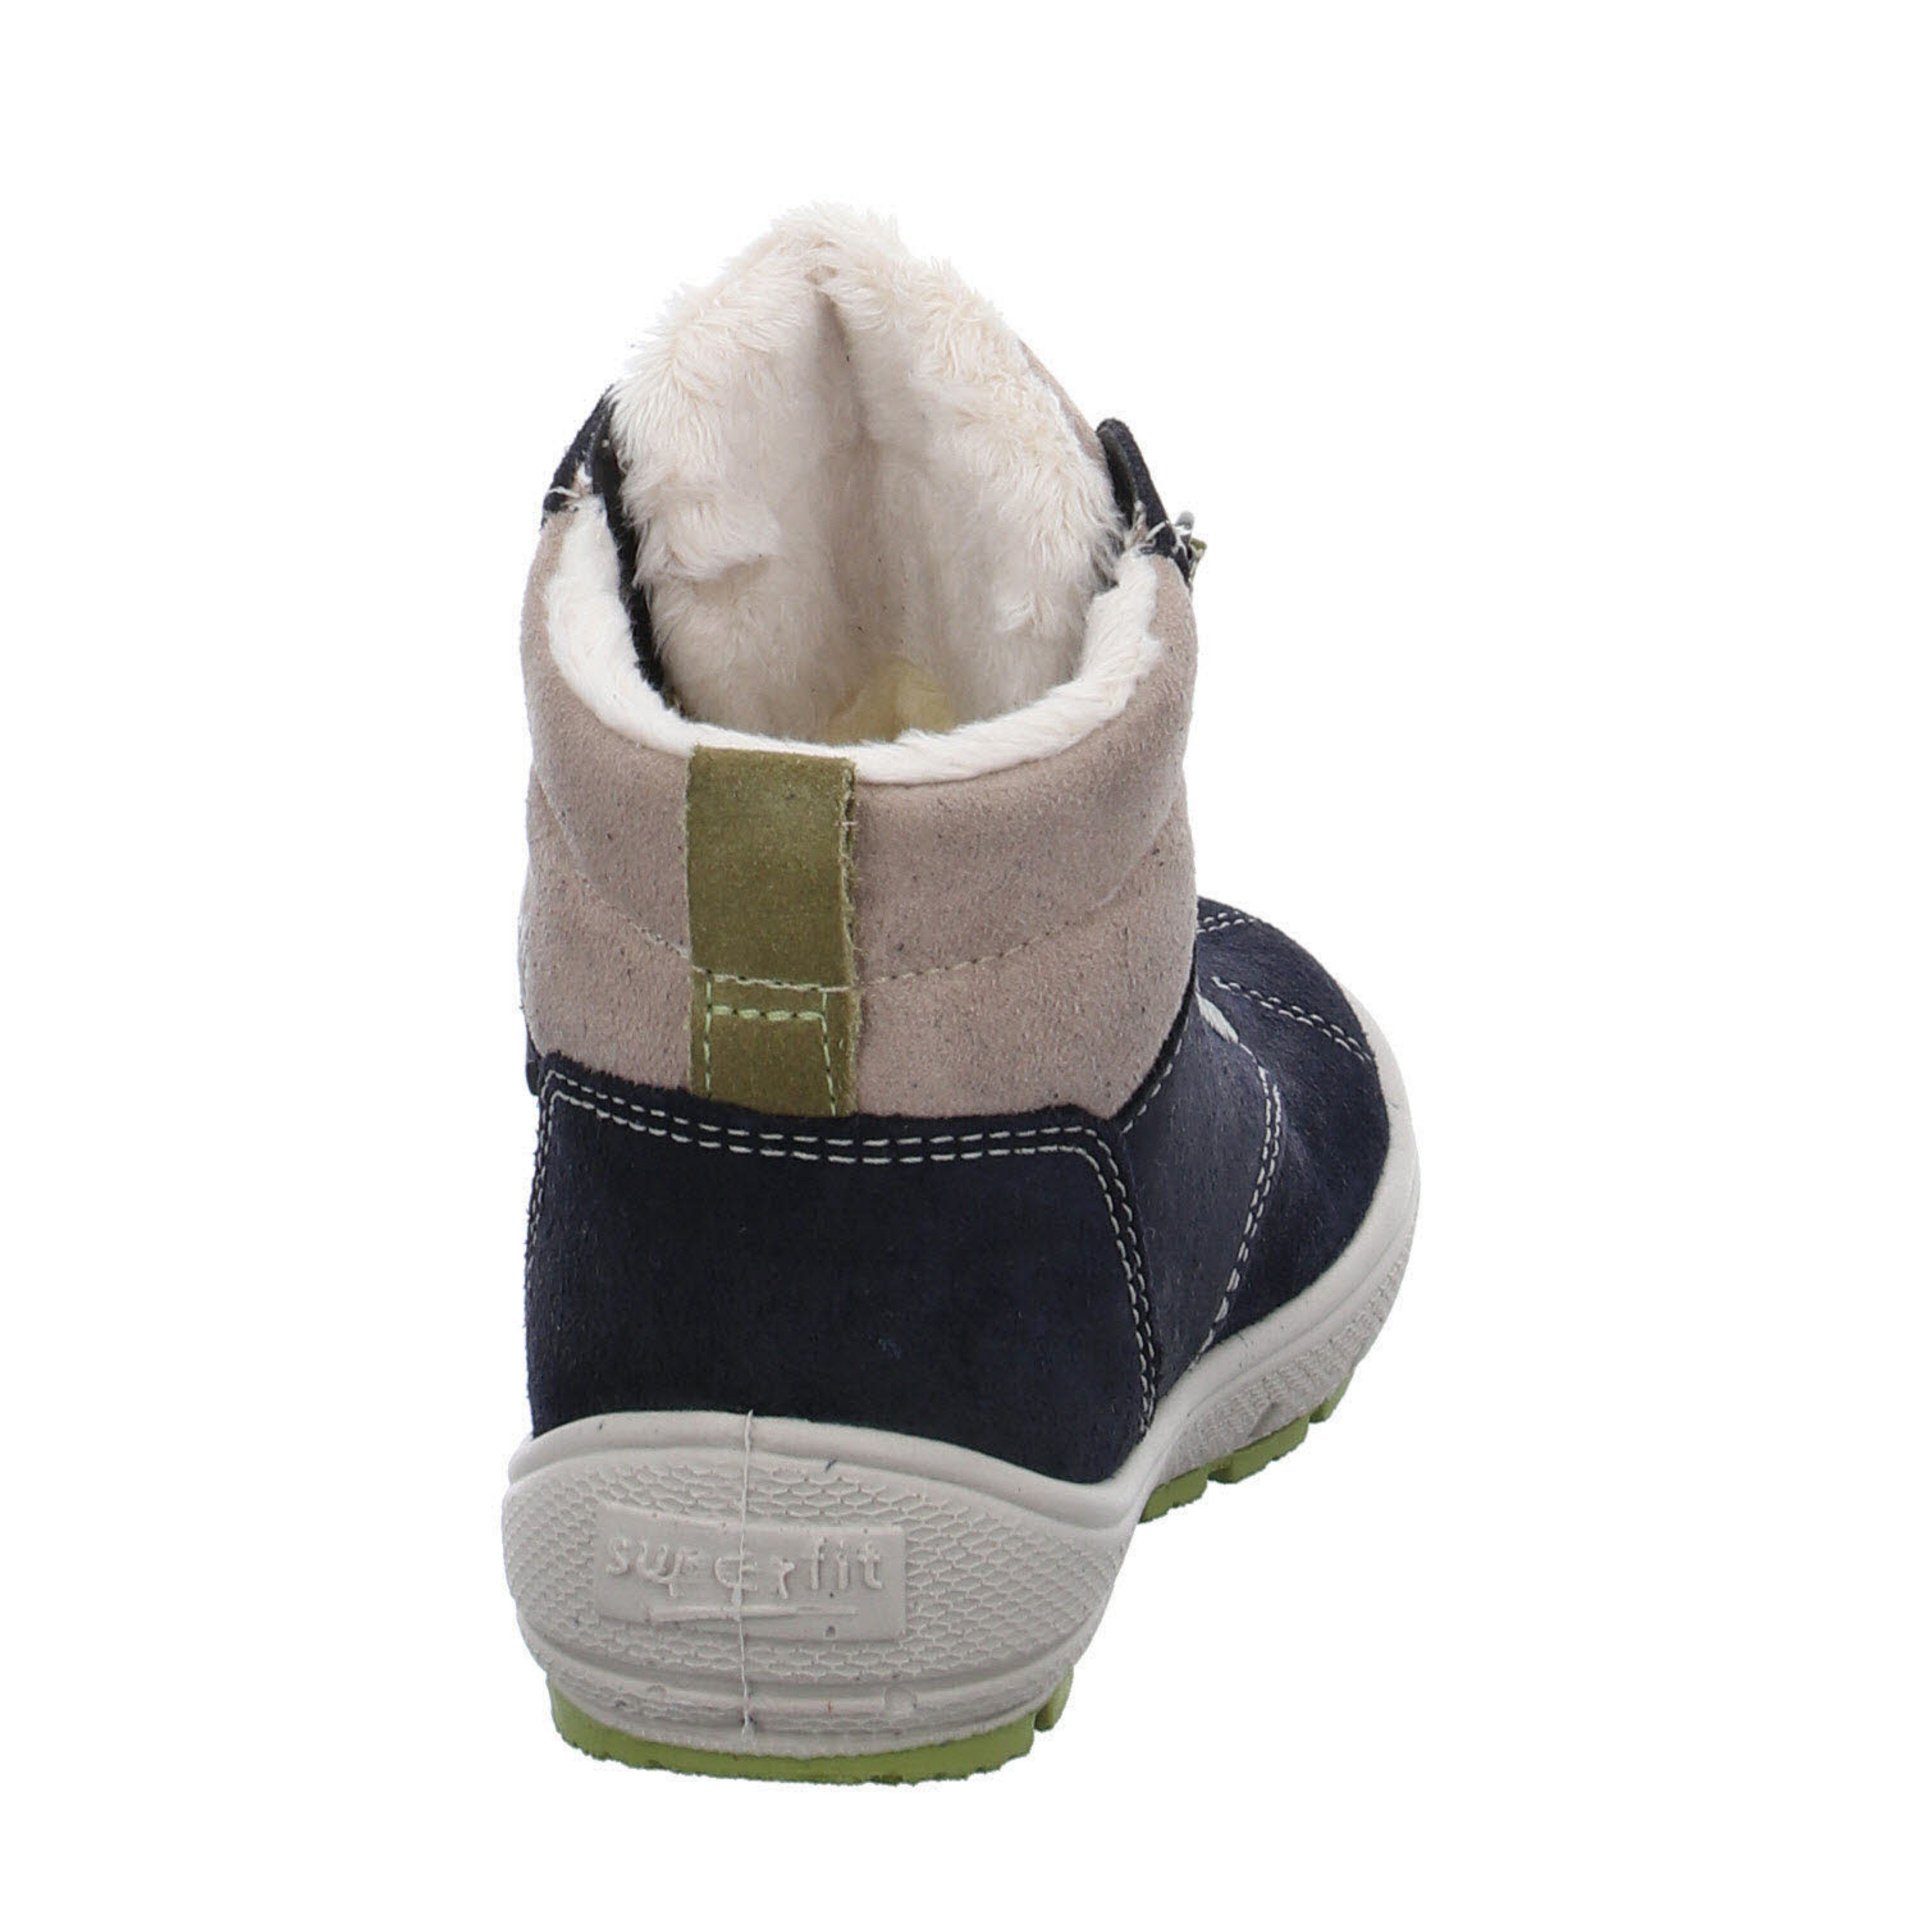 Superfit Baby Lauflernschuhe Krabbelschuhe Groovy Boots Leder-/Textilkombination Lauflernschuh